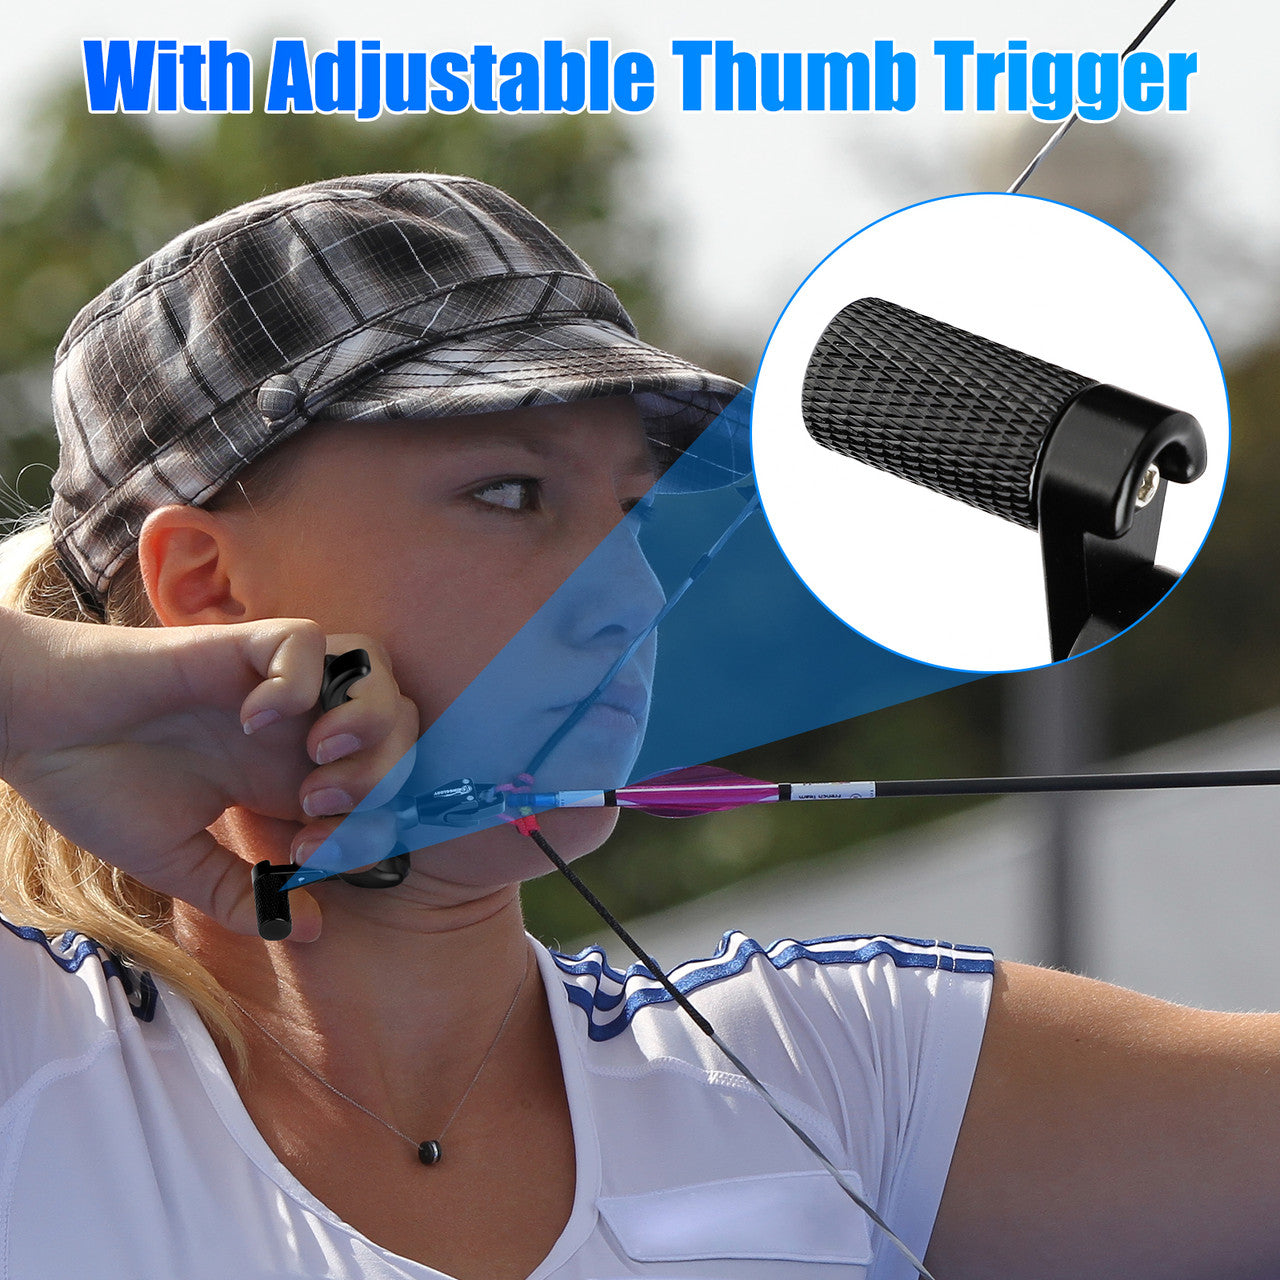 Rotation Release Adjustable Caliper Trigger Grip - Finger Grip Adjustable Archery Release Aids,for Compound Bow (Black)